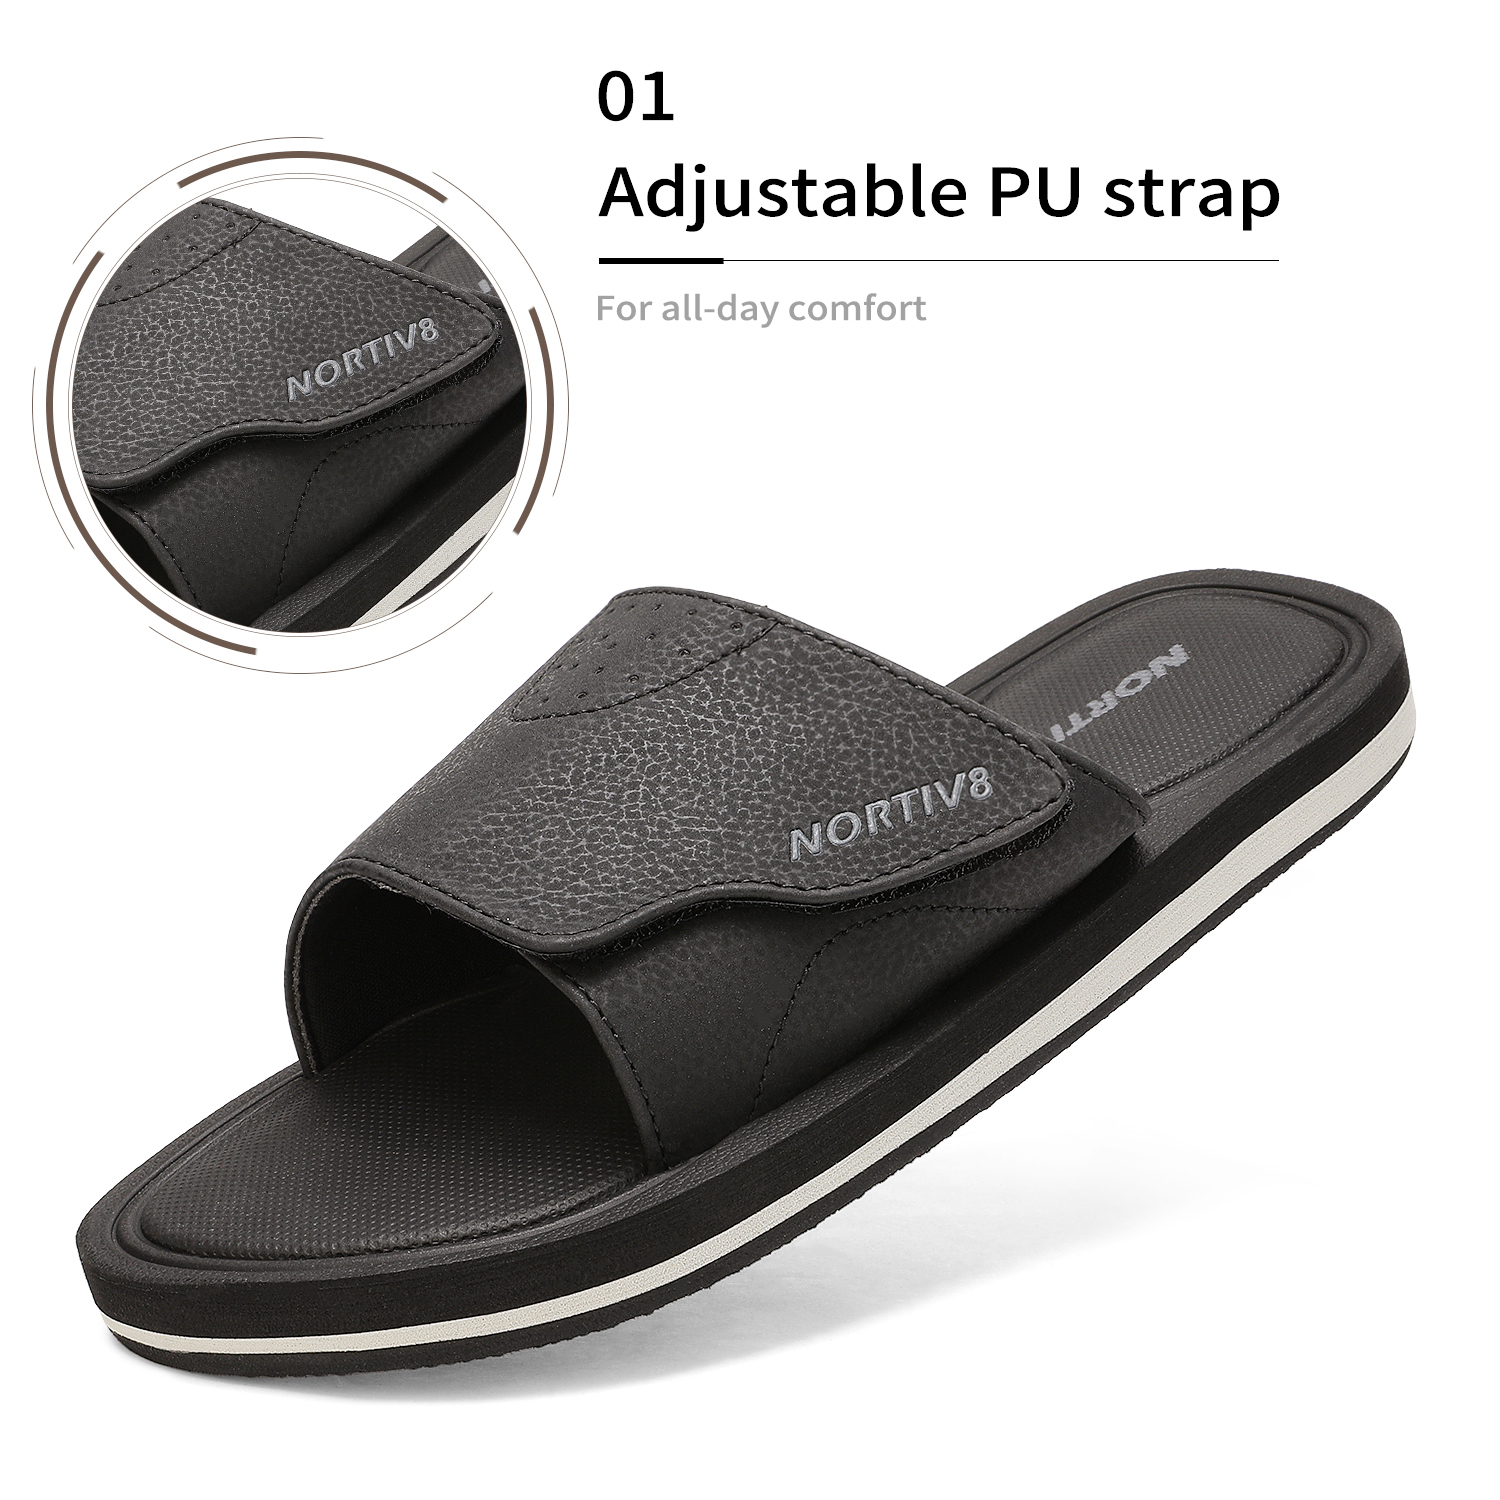 Nortiv 8 Men's Memory Foam Adjustable Slide Sandals Comfort Lightweight Beach Shoes Summer Outdoor Slipper Fusion Black Size 14 - image 4 of 5